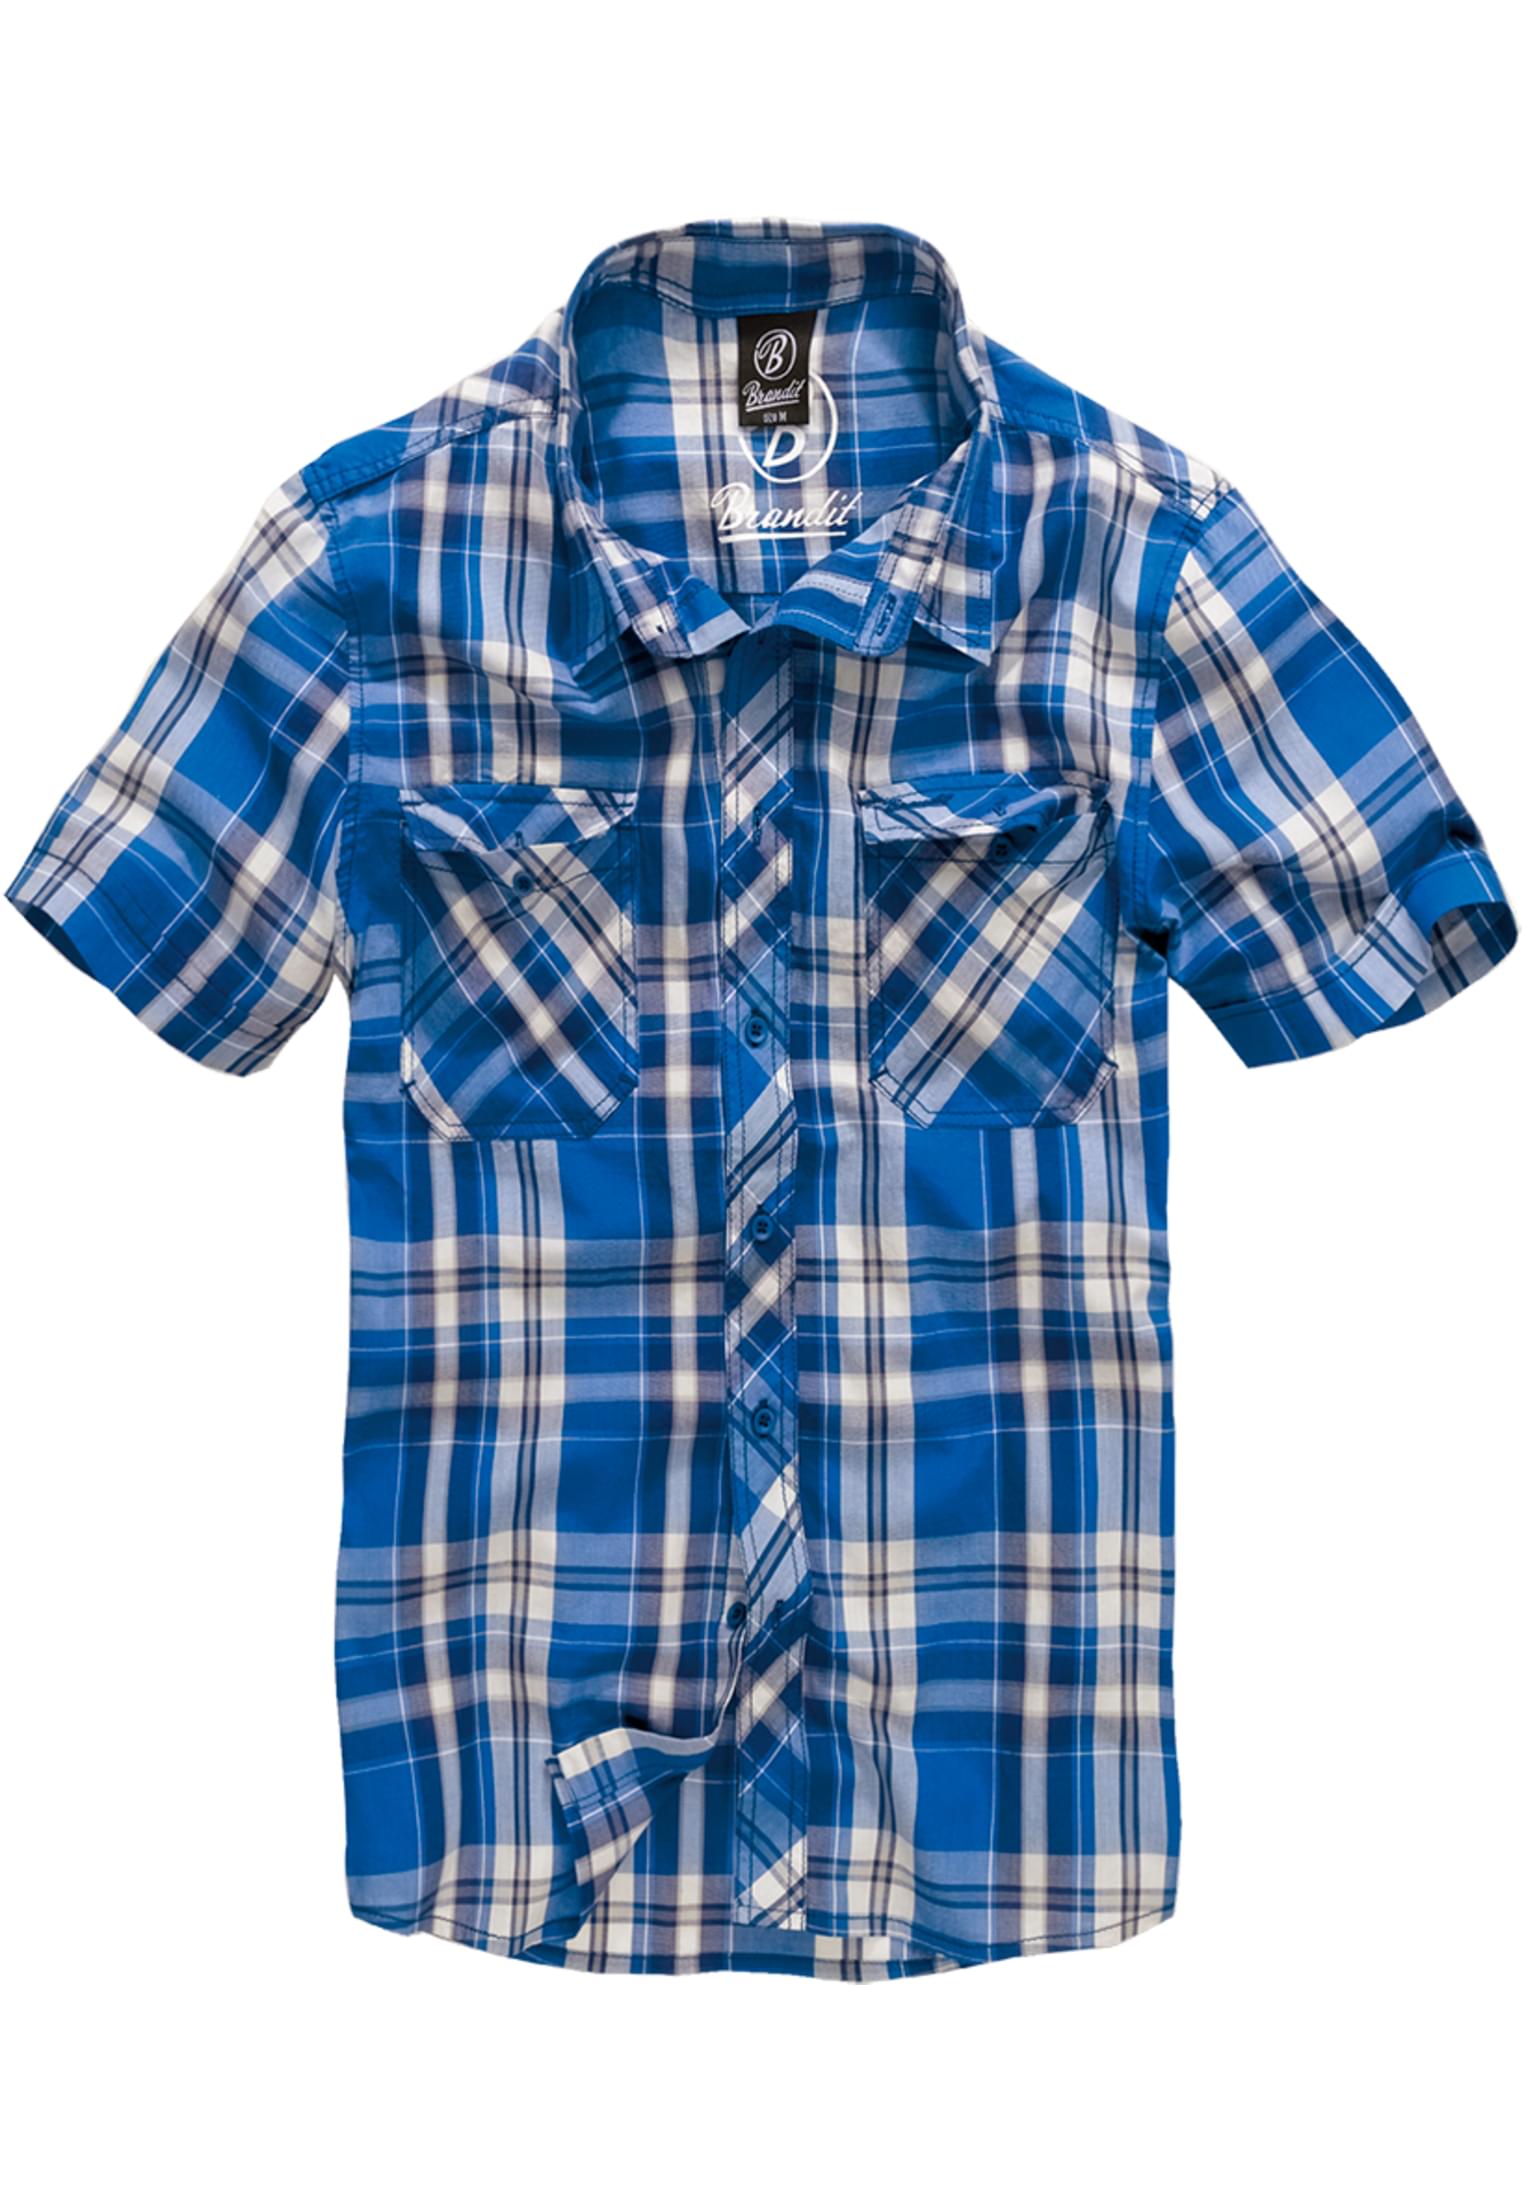 Hemden Roadstar Shirt in Farbe blue